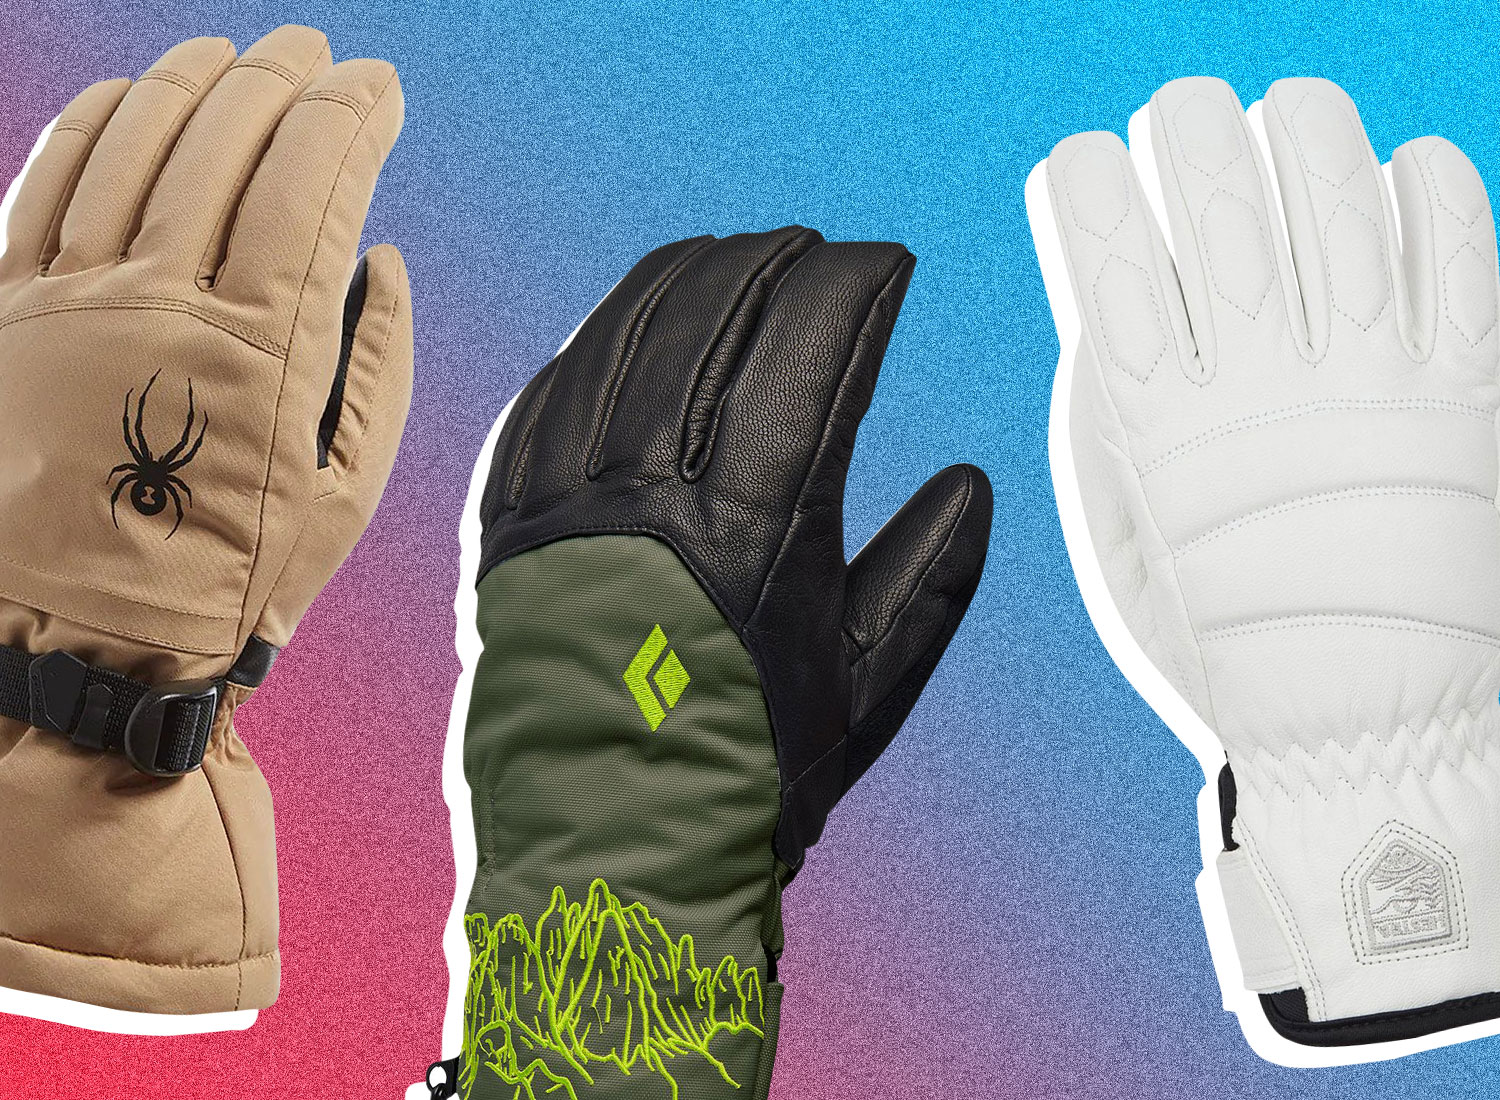 15 Best Ski Gloves To Keep Those Mitts Warm & Snug